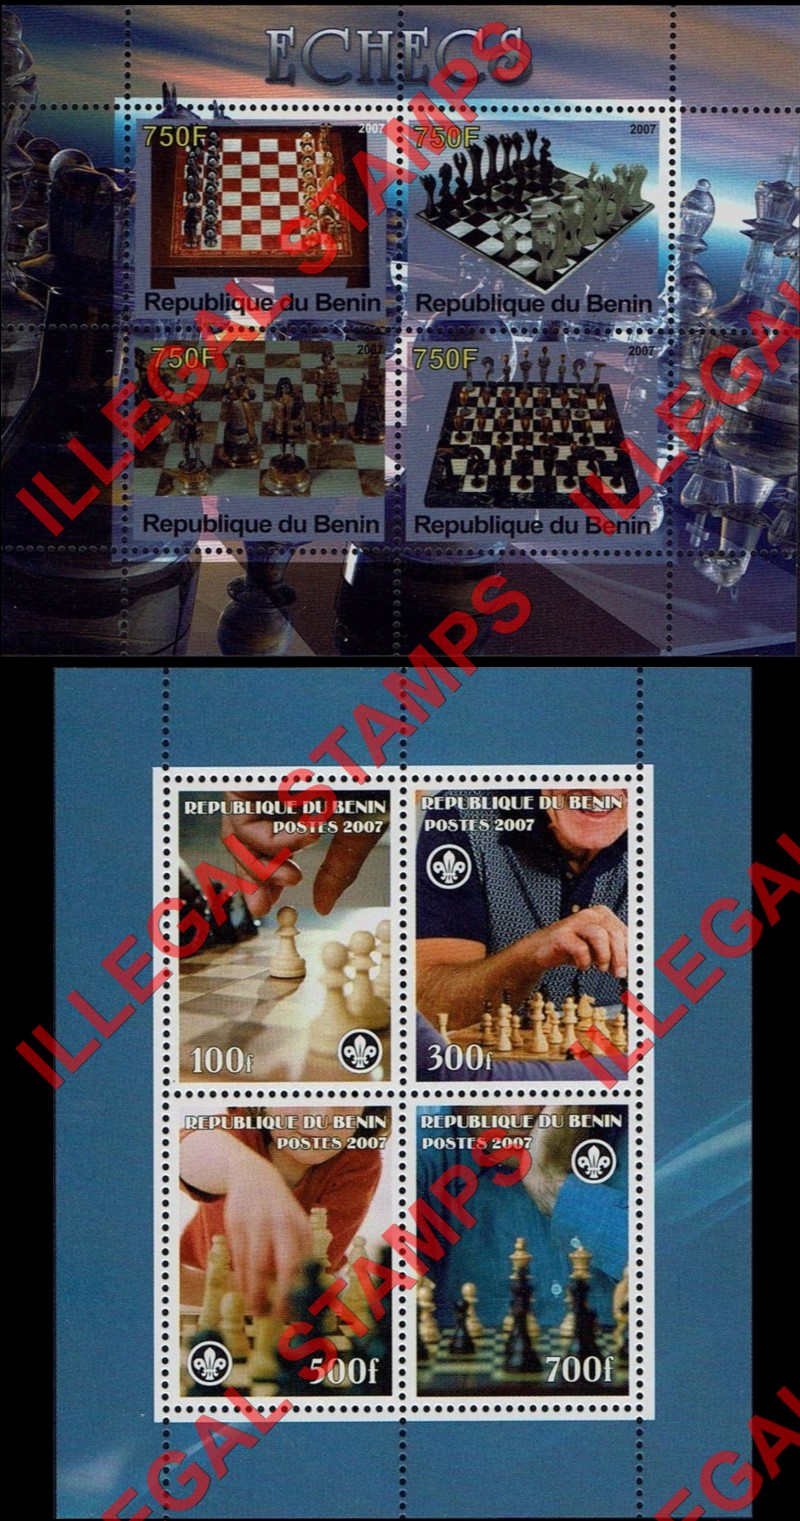 Benin 2007 Chess Illegal Stamp Souvenir Sheets of 4